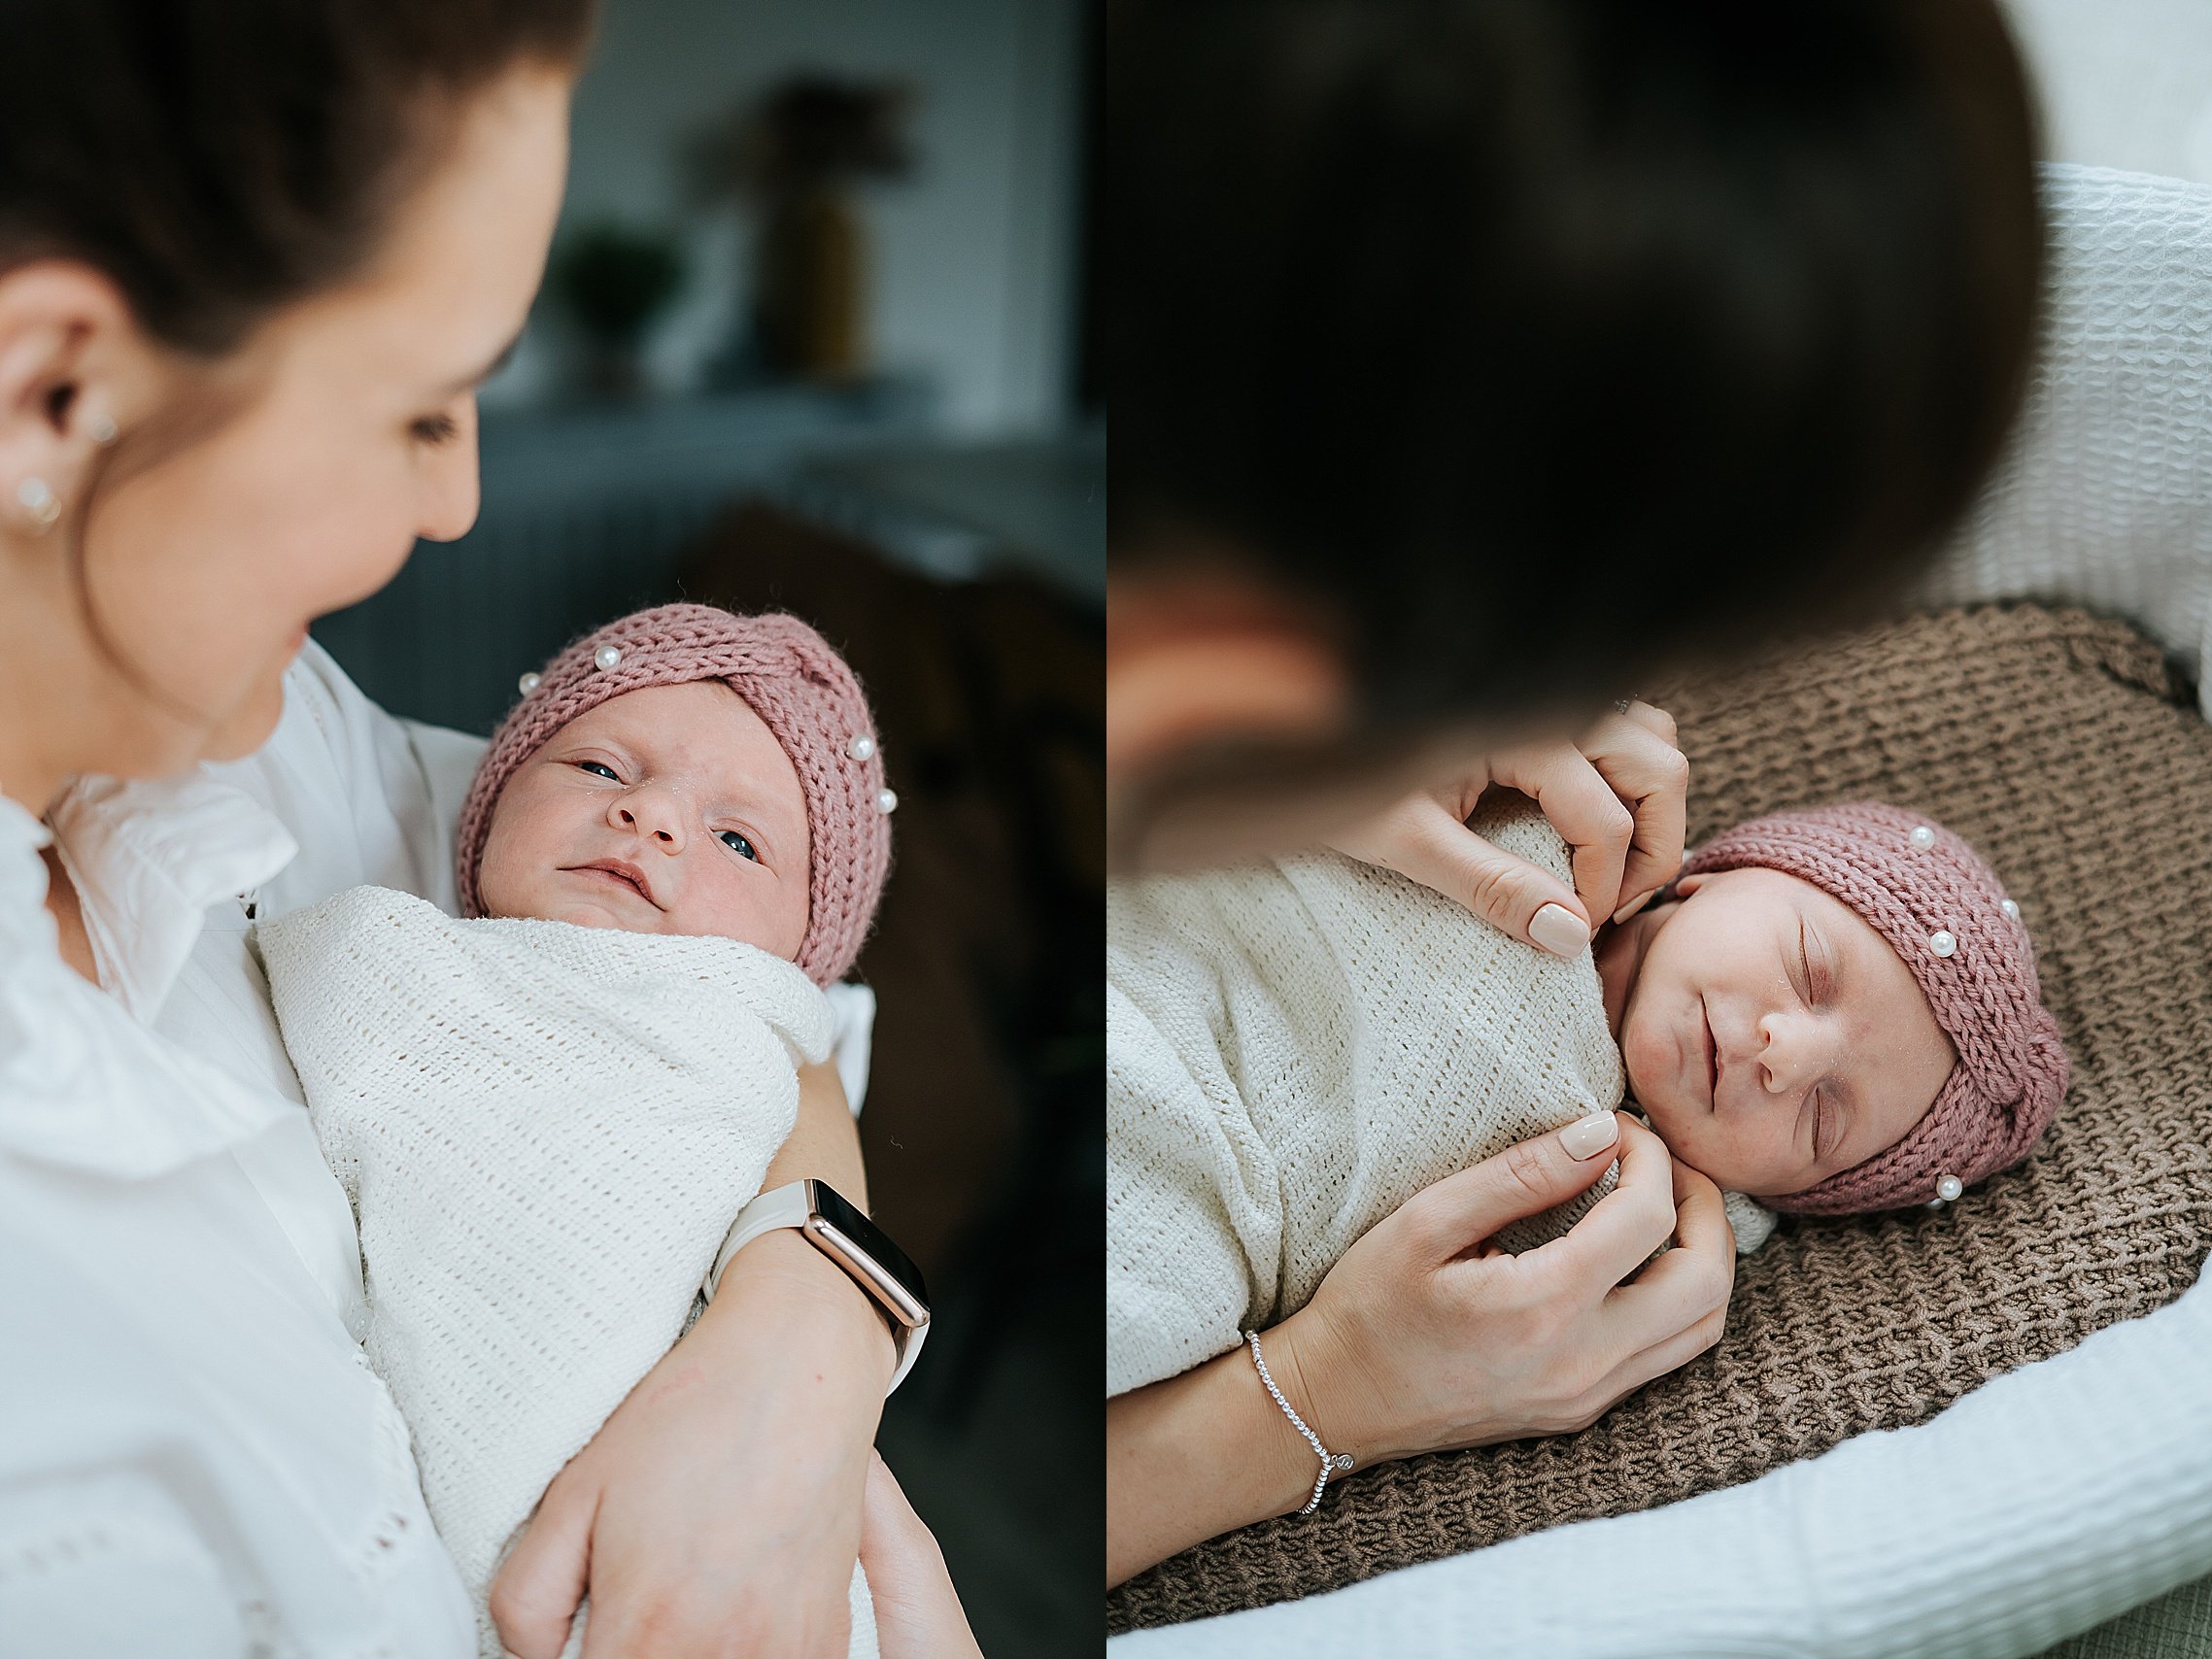 Imogen+newborn+lacashire+photography+photographer+lifestyle+baby_0055.jpg